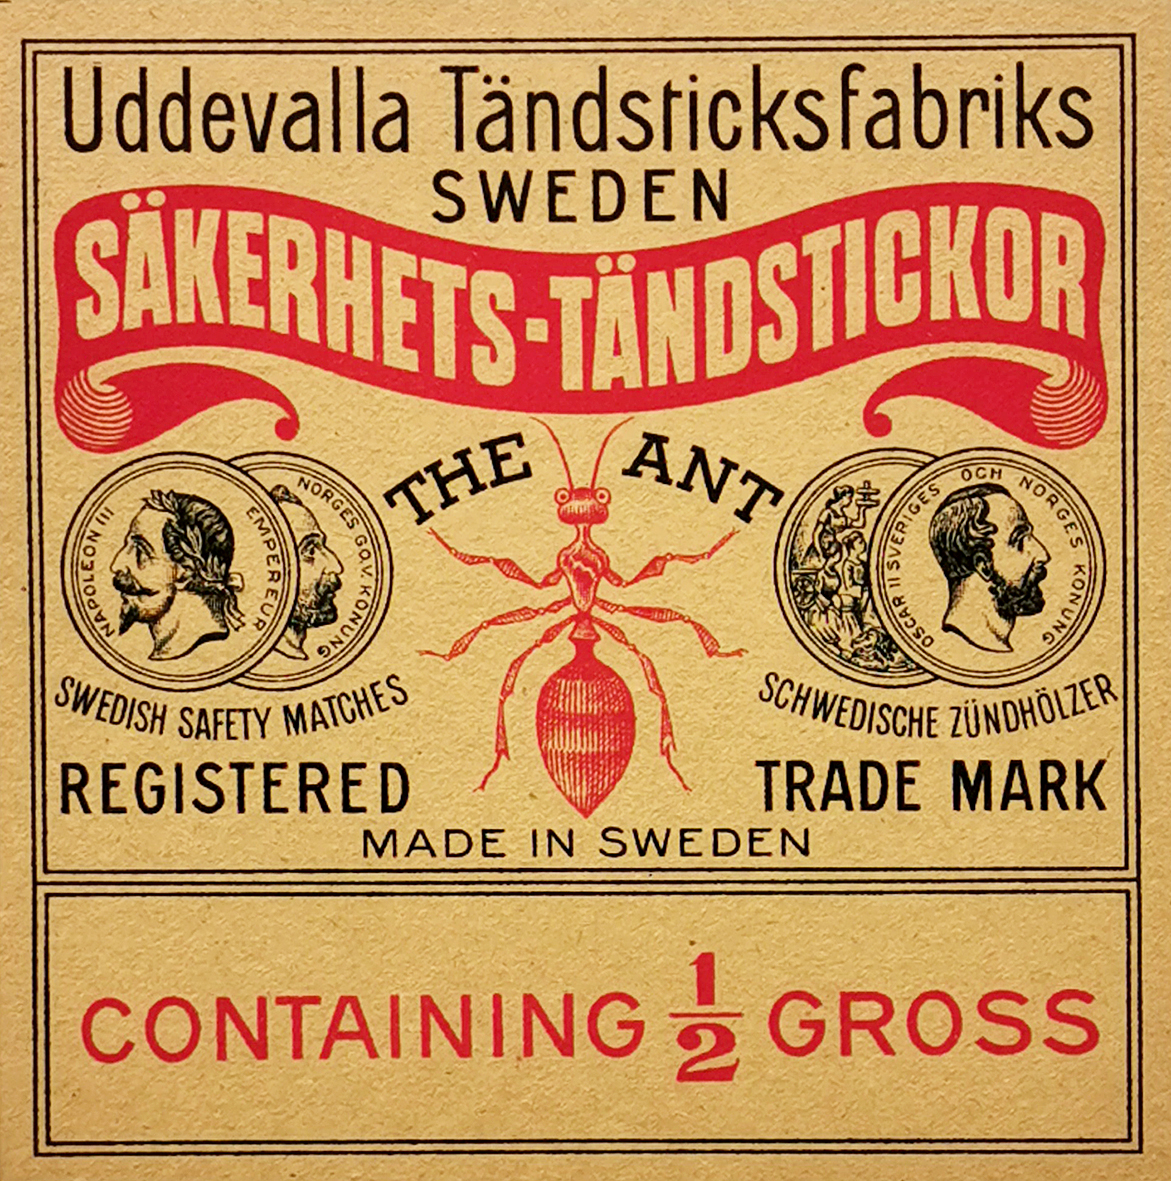 Uddevalla Tandstricksfabriks. - Antique Print from 1900